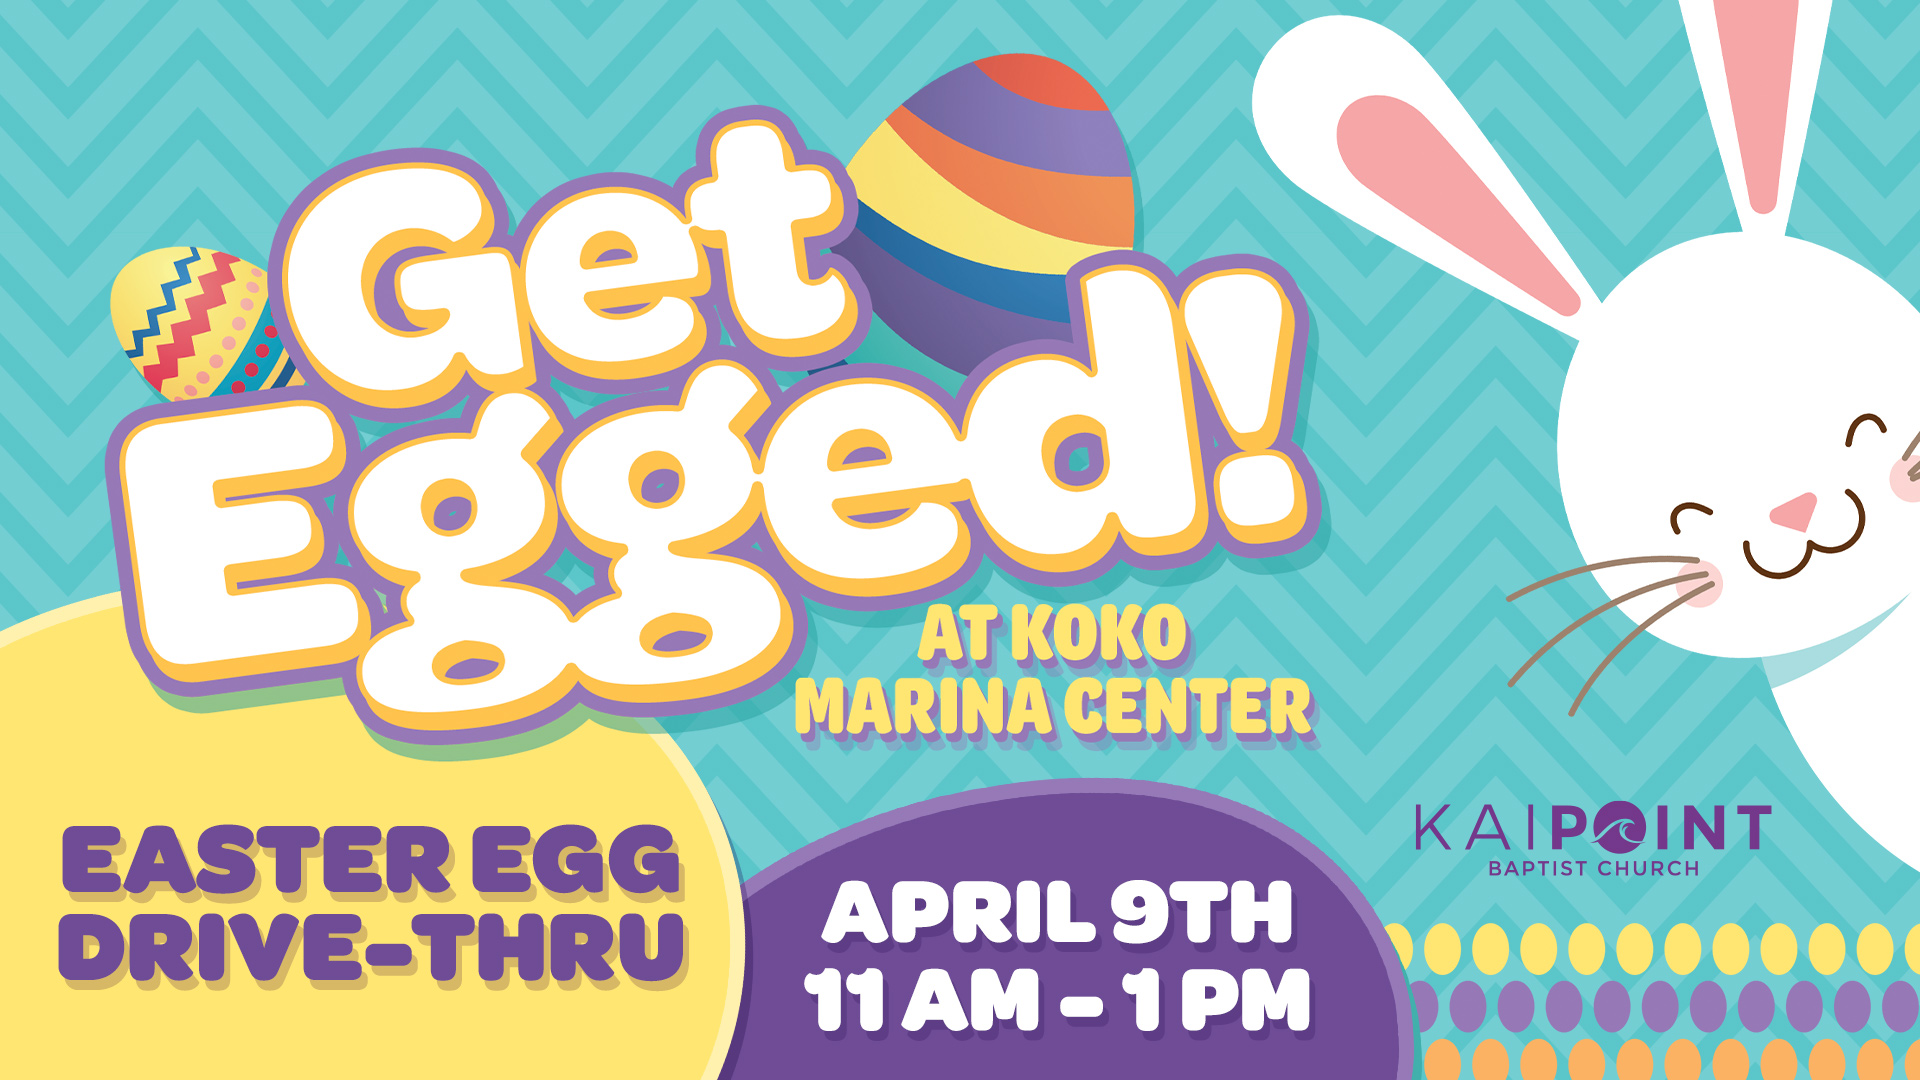 Get Egged! Easter Egg Drive Thru at Koko Marina Center